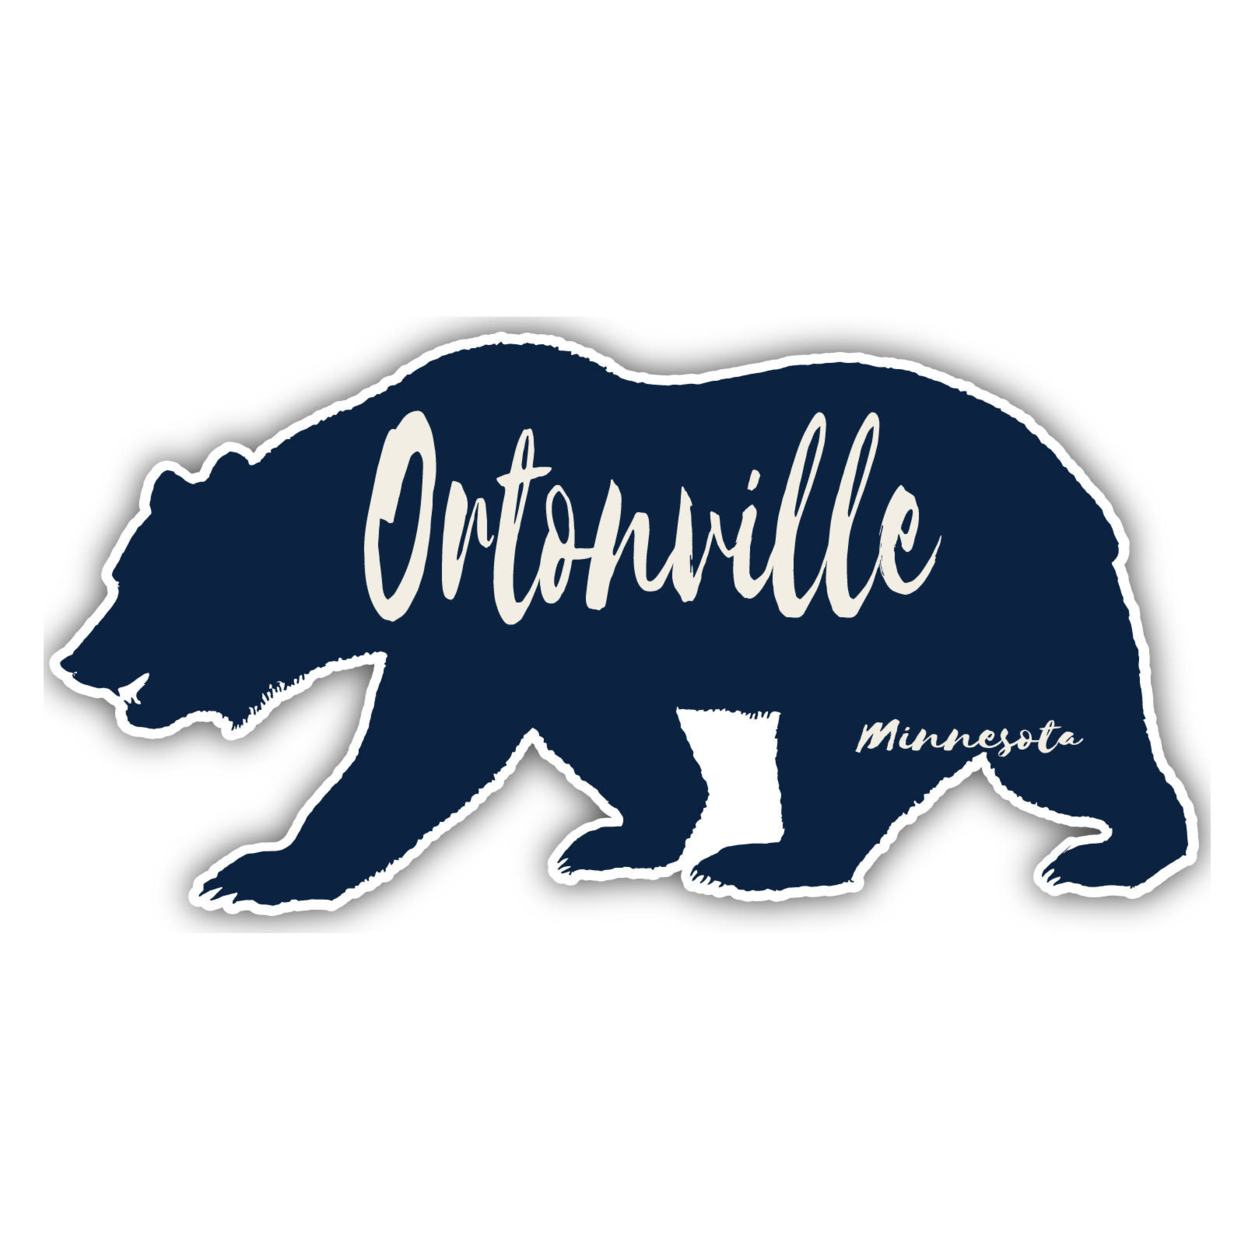 Ortonville Minnesota Souvenir Decorative Stickers (Choose Theme And Size) - Single Unit, 2-Inch, Bear